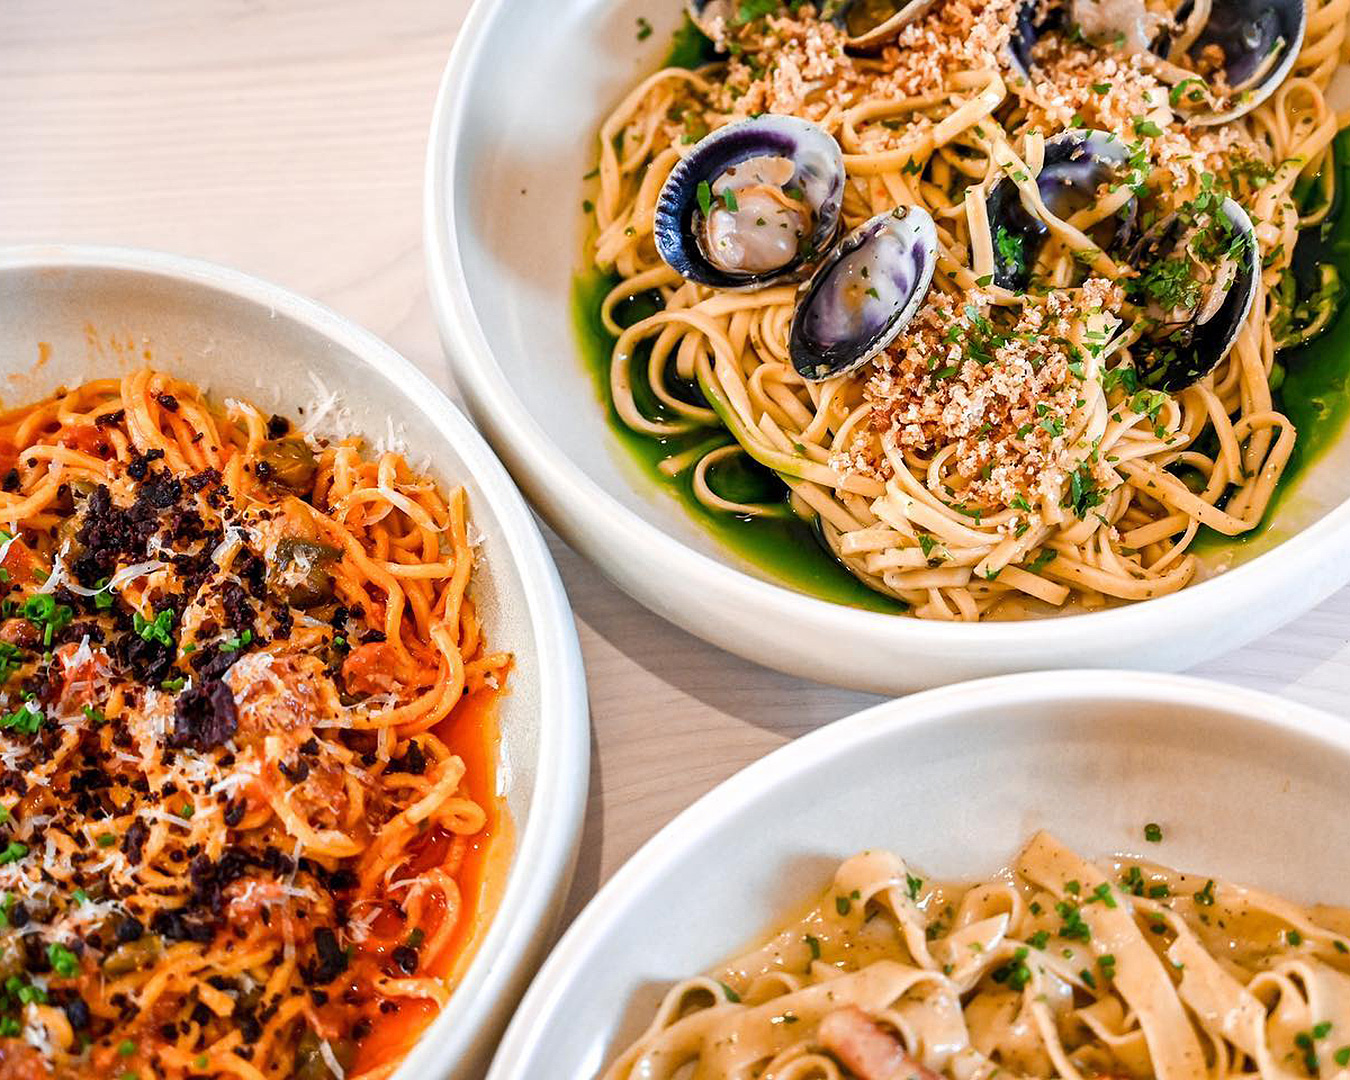 Sylvia Park welcomes new all-day Italian restaurant Baci Eatery